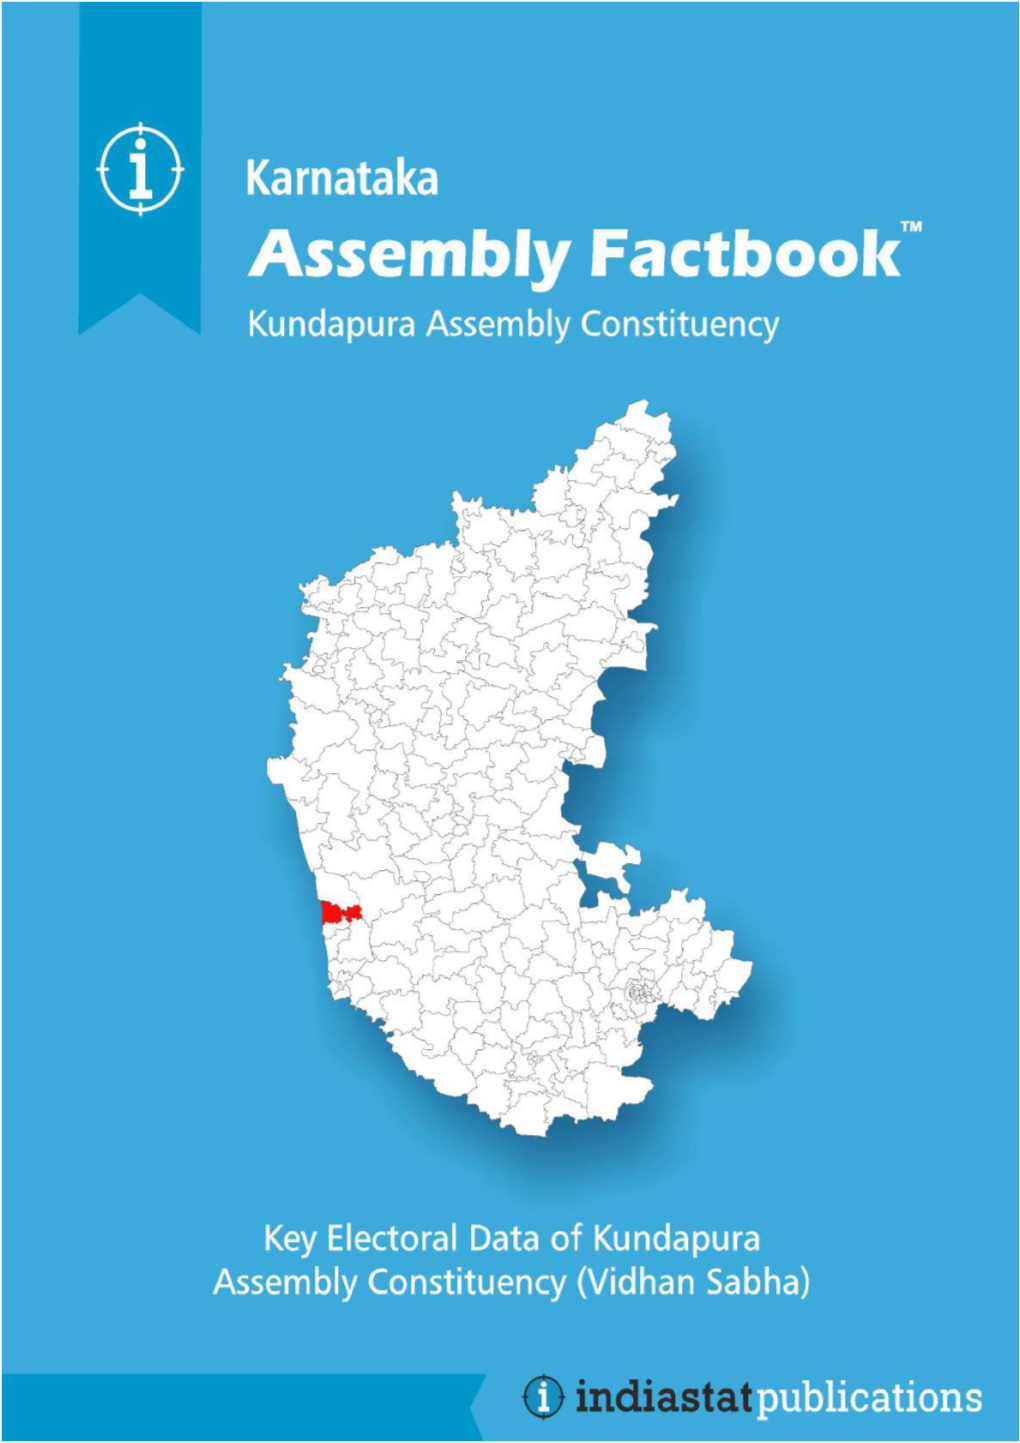 Kundapura Assembly Karnataka Factbook